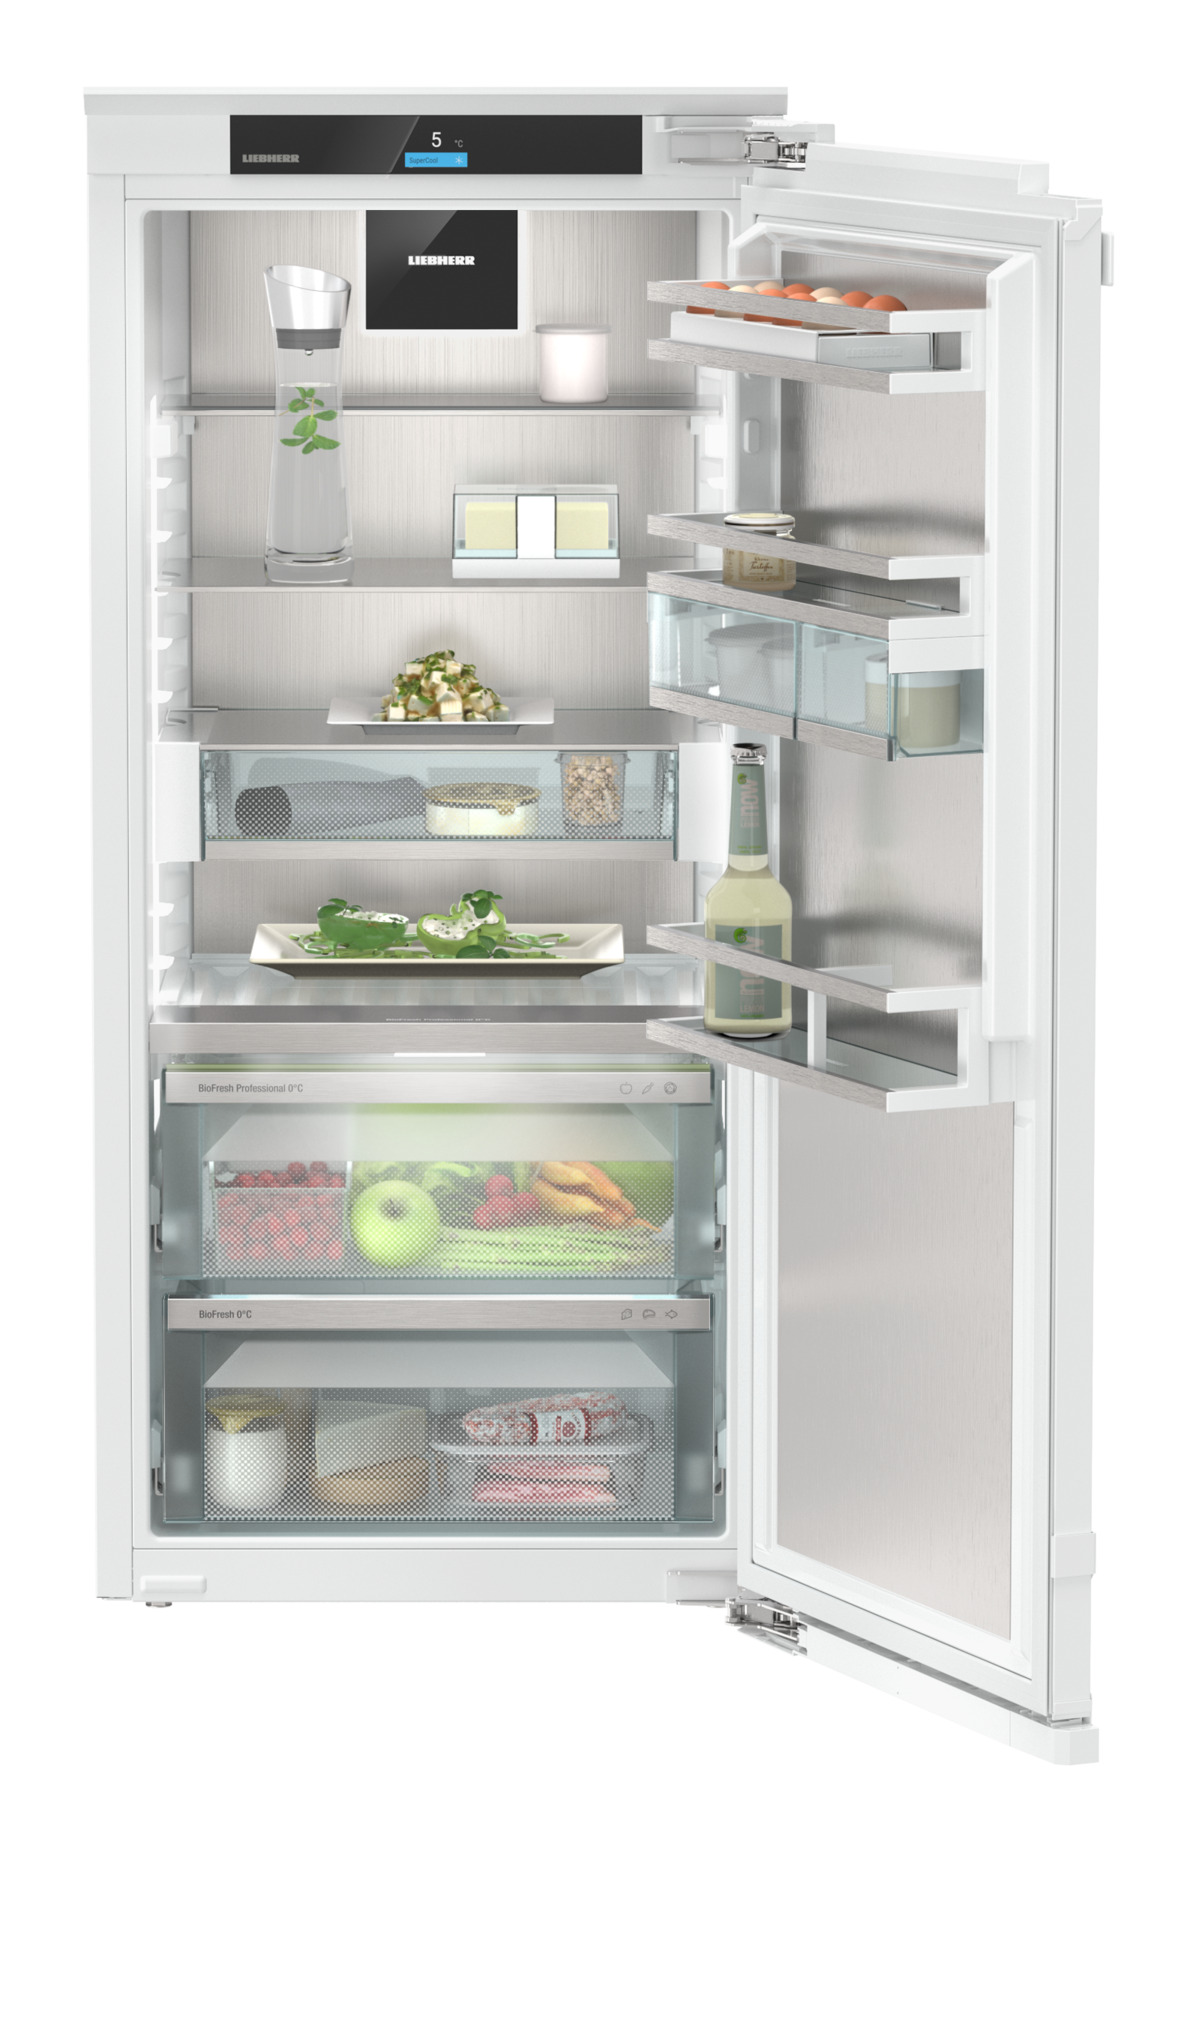 Fully integrated AutoDoor refrigerators